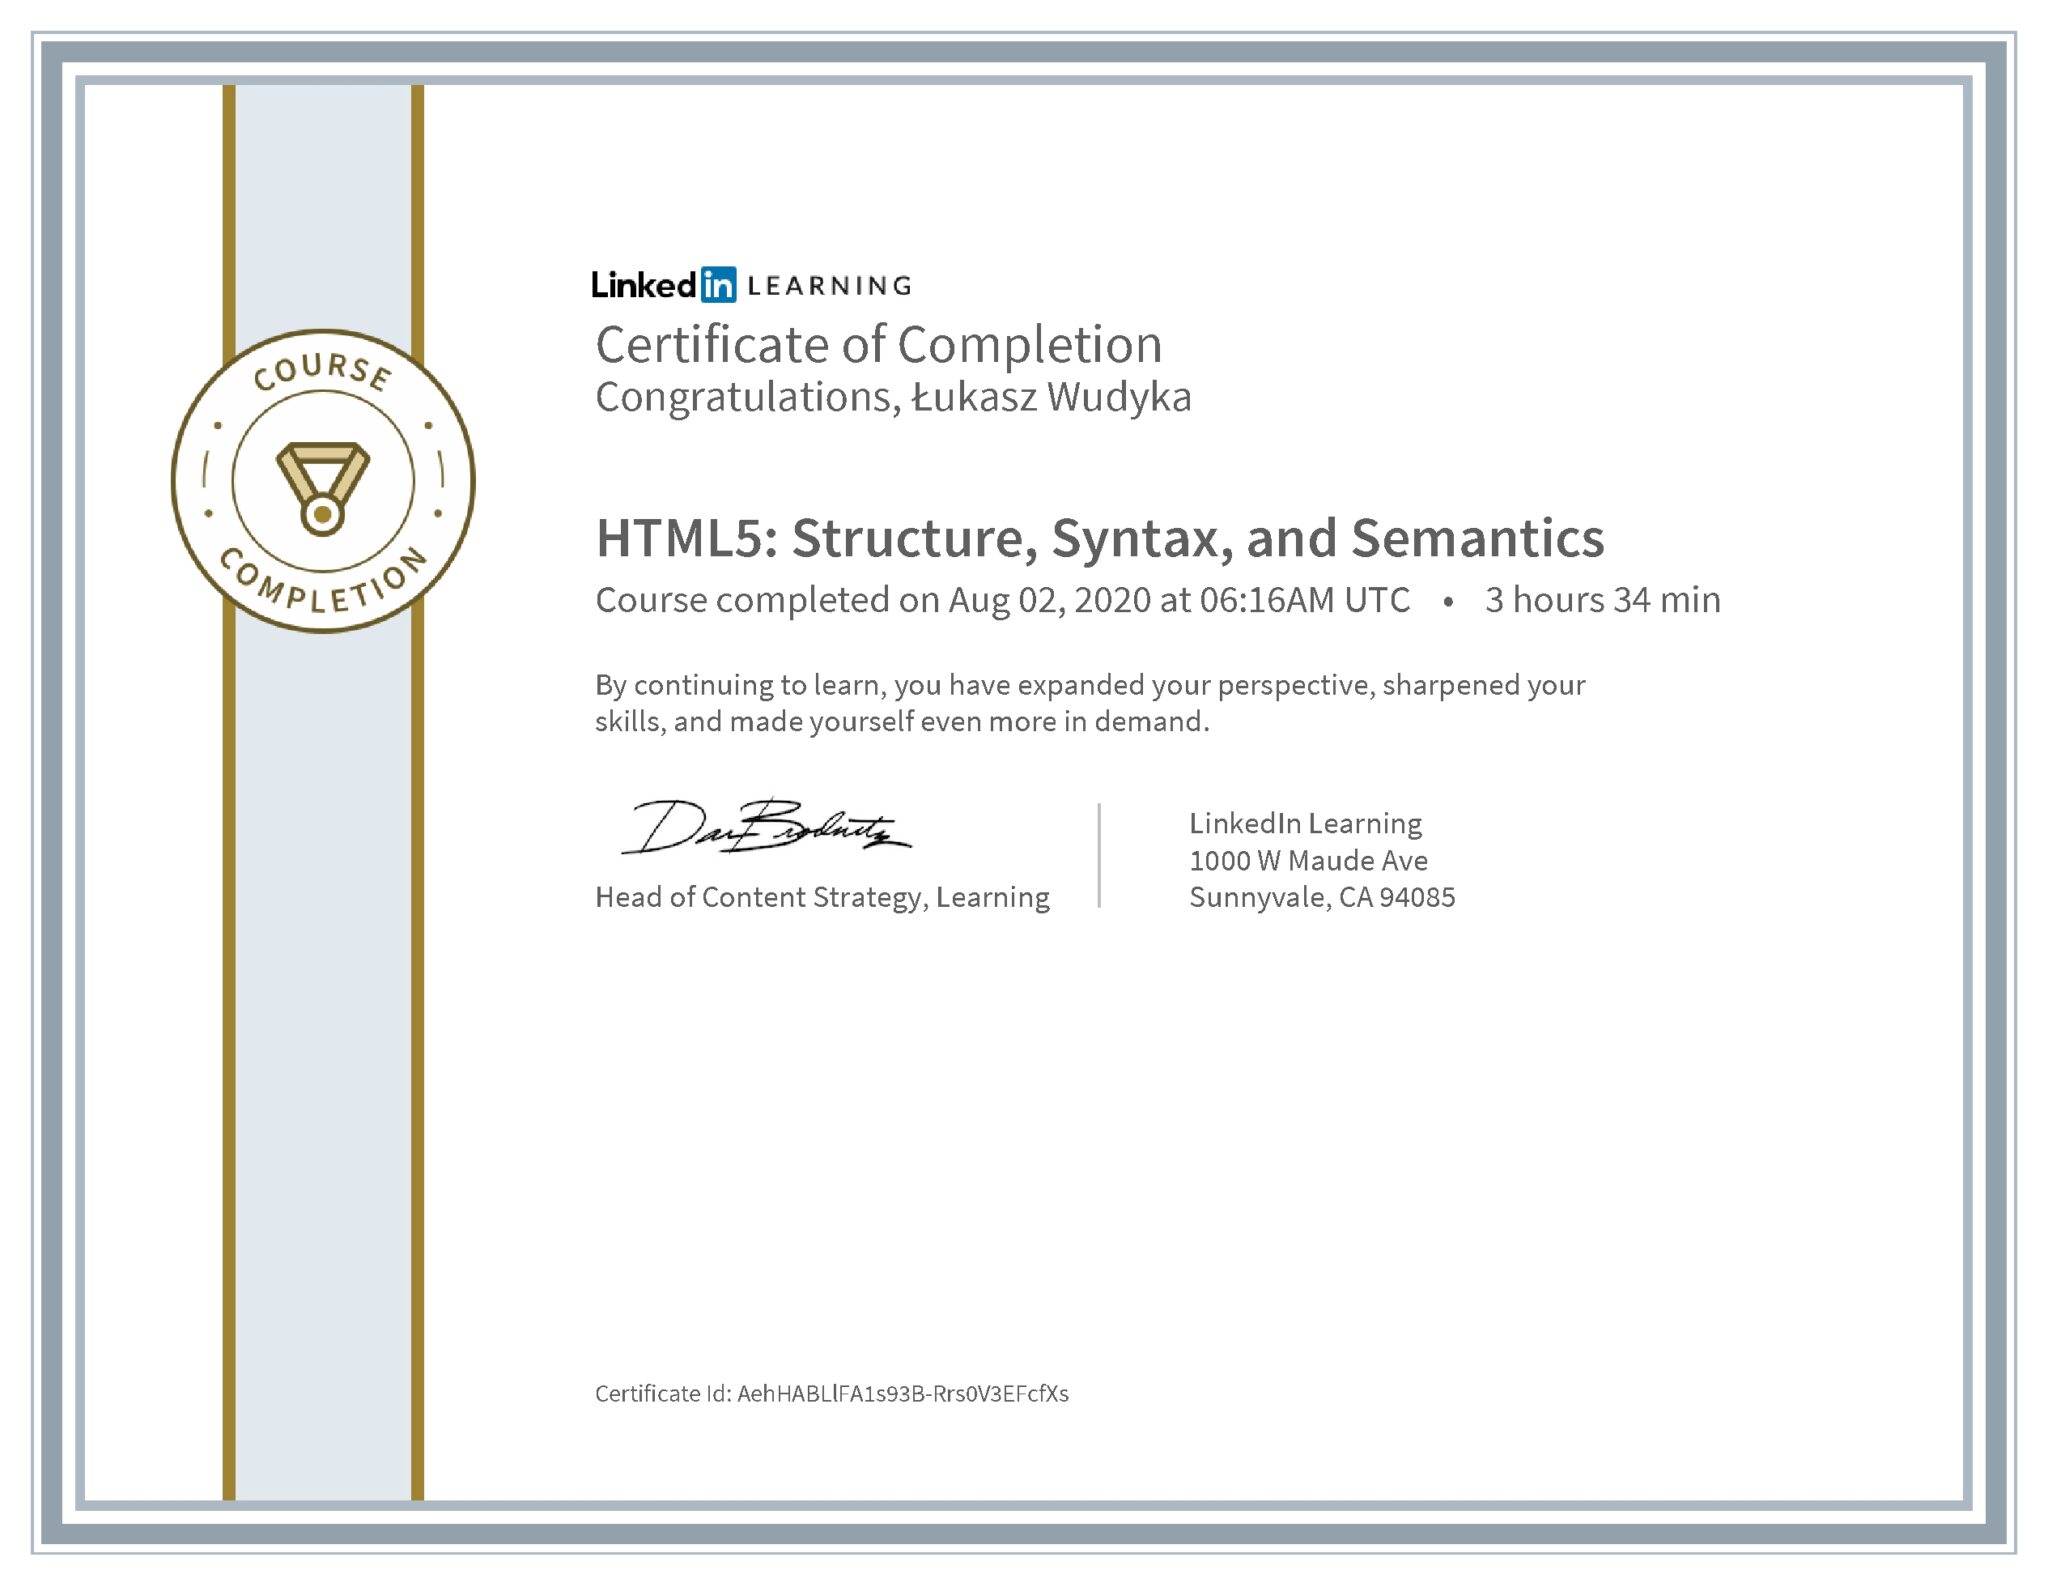 Łukasz Wudyka certyfikat LinkedIn HTML5: Structure, Syntax, and Semantics